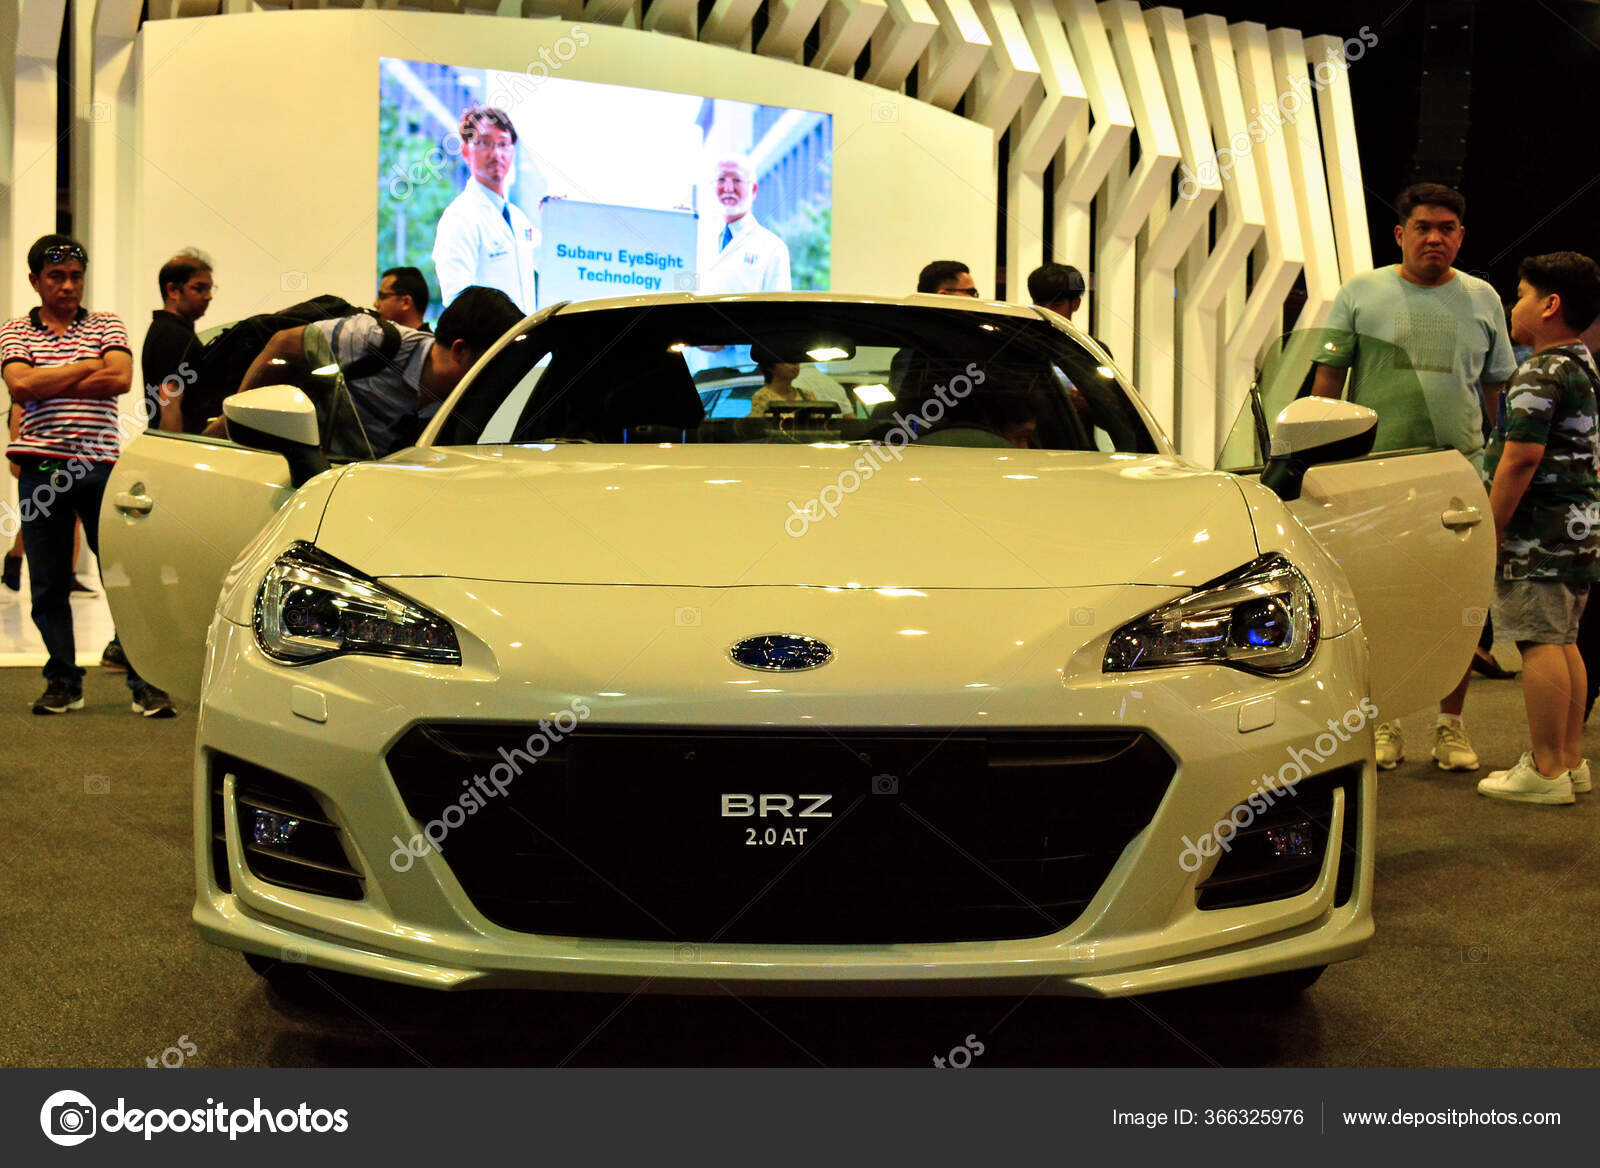 Subaru Brz图库照片 免版税subaru Brz图片 Depositphotos